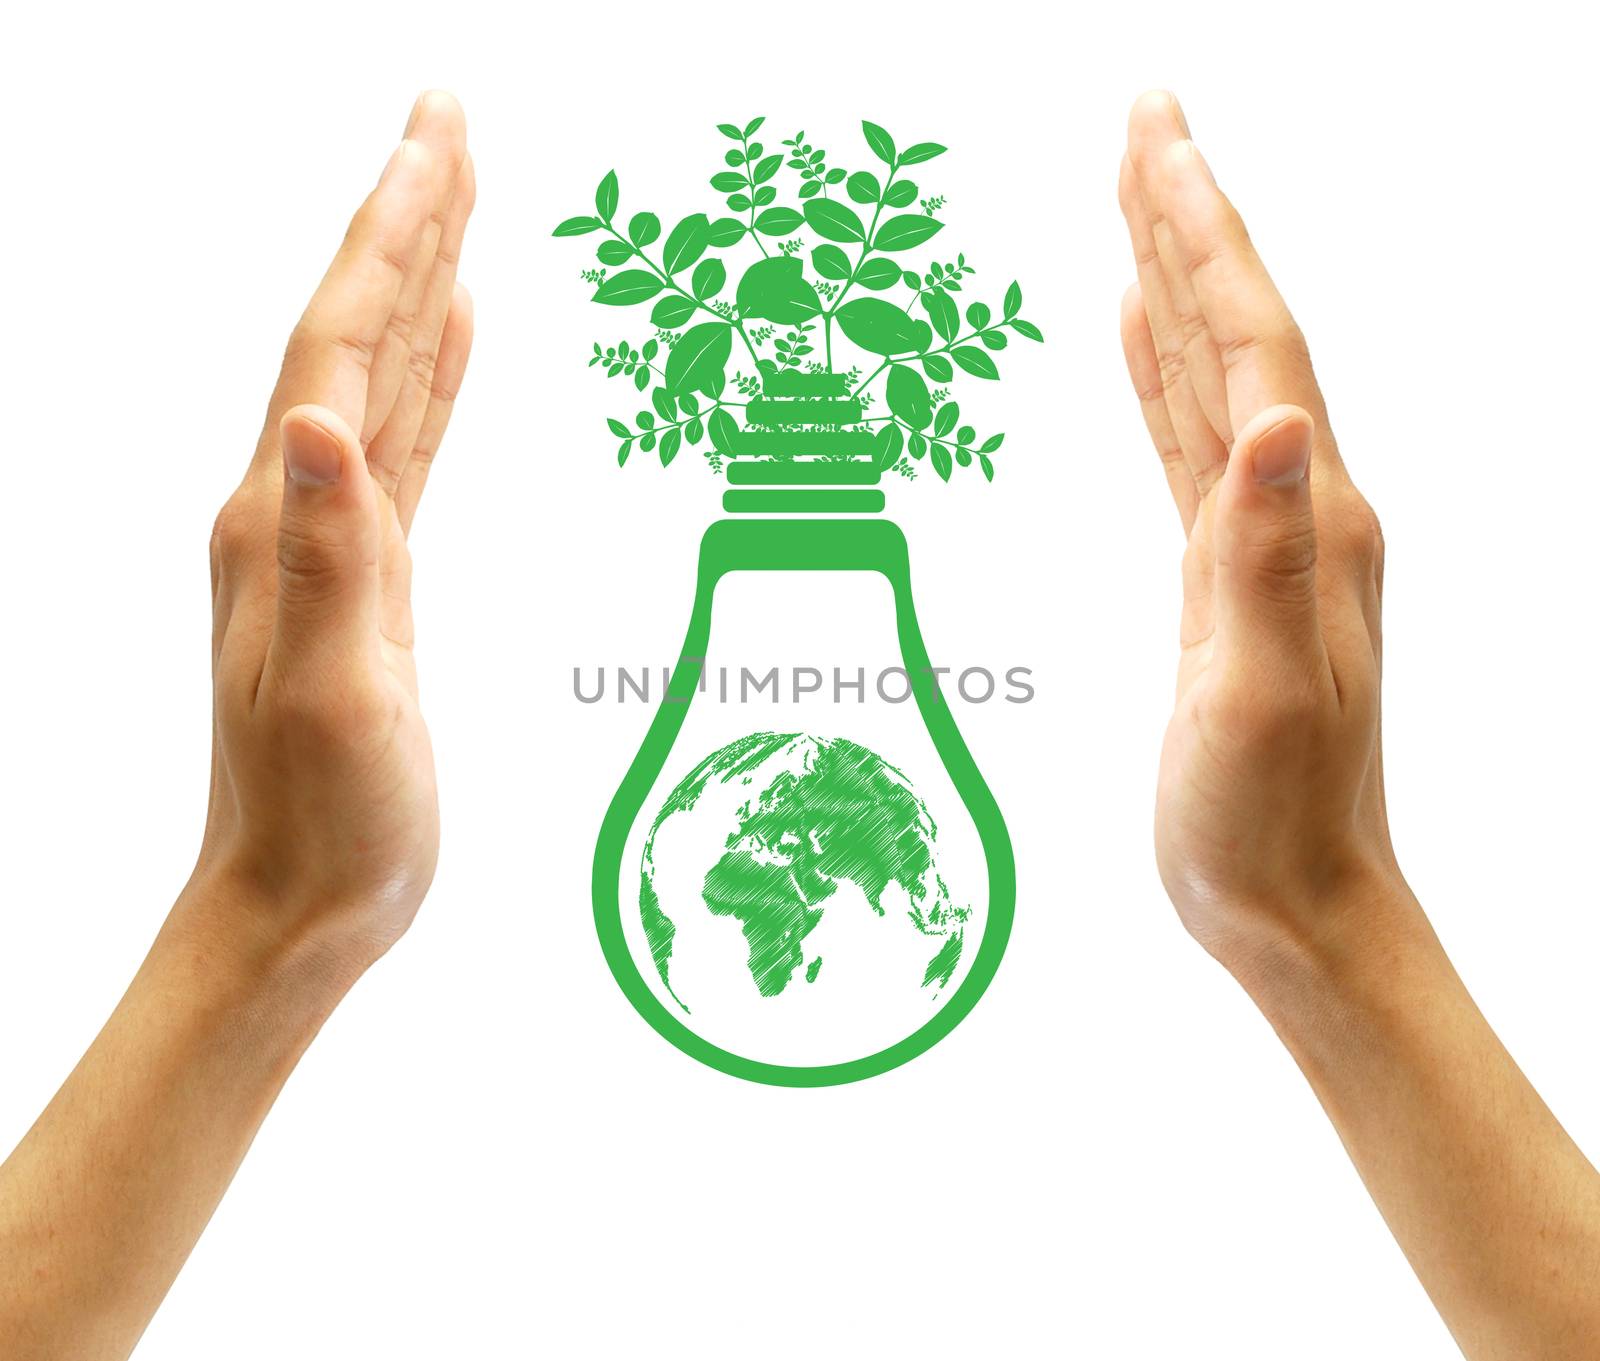 Hands holding green ecology light bulb